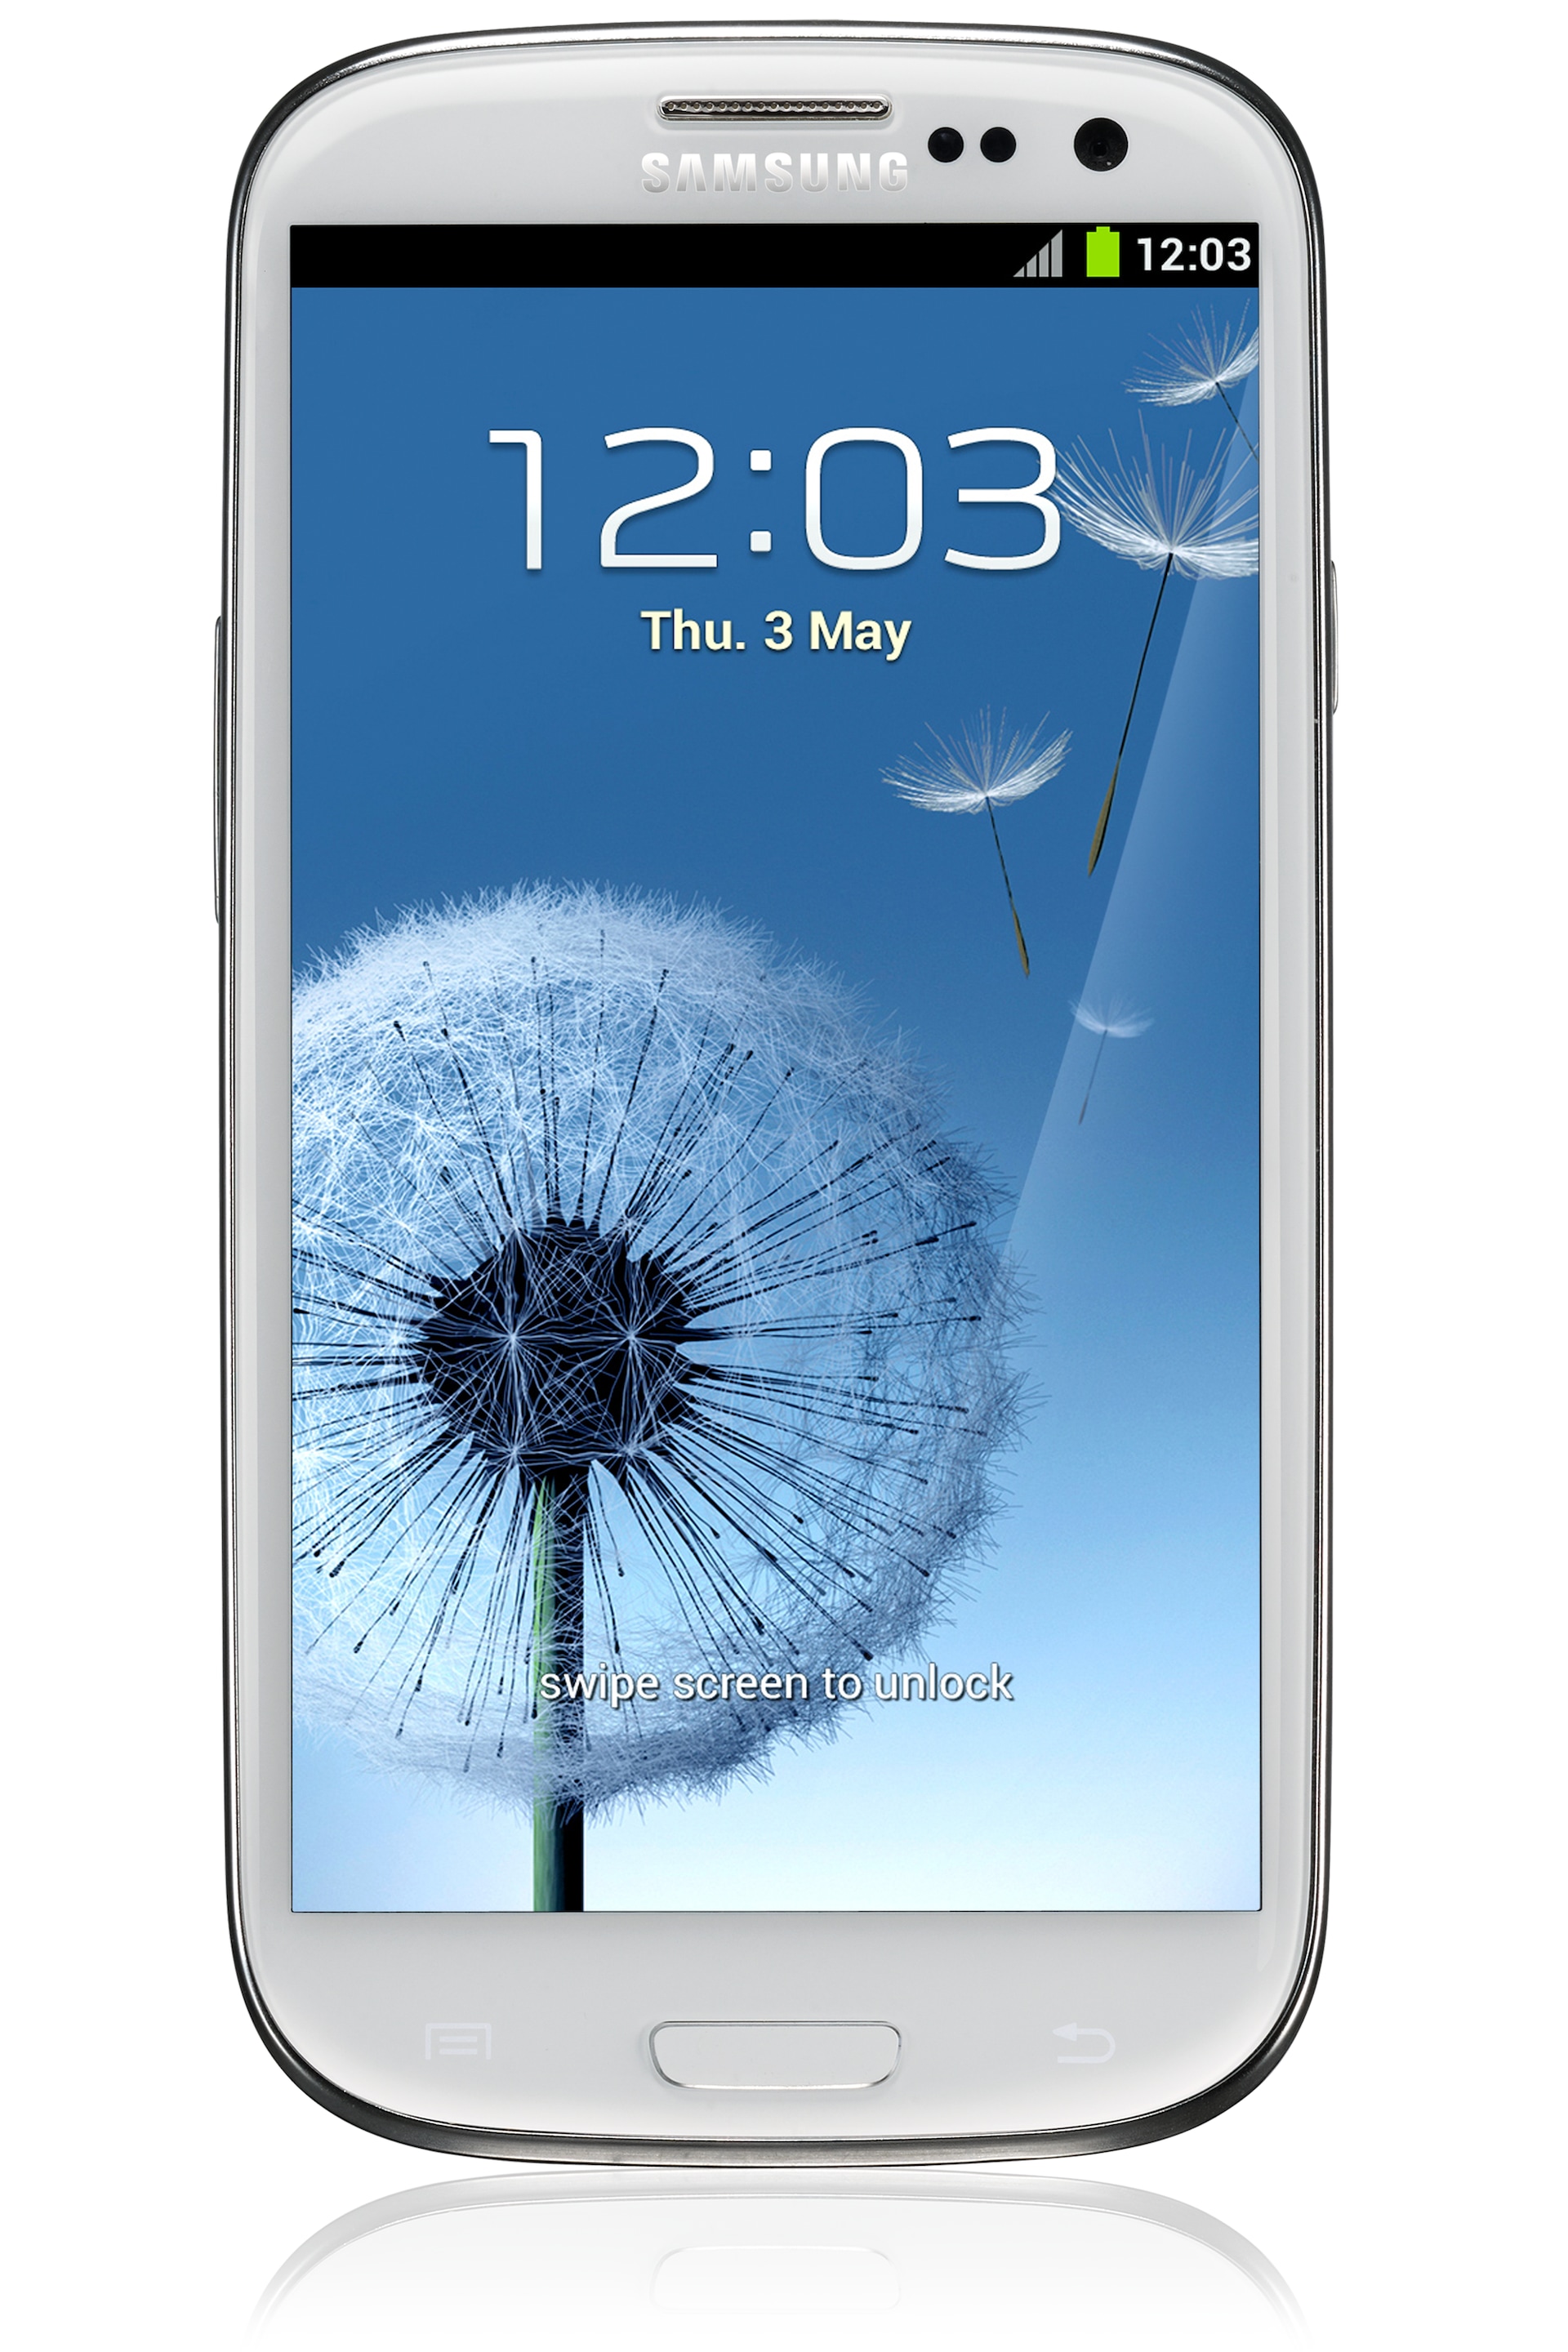 Retencion Reportero vitalidad Samsung Galaxy S III (S3) - 3G WiFi NFC 8MP Camera Phone | Samsung IE